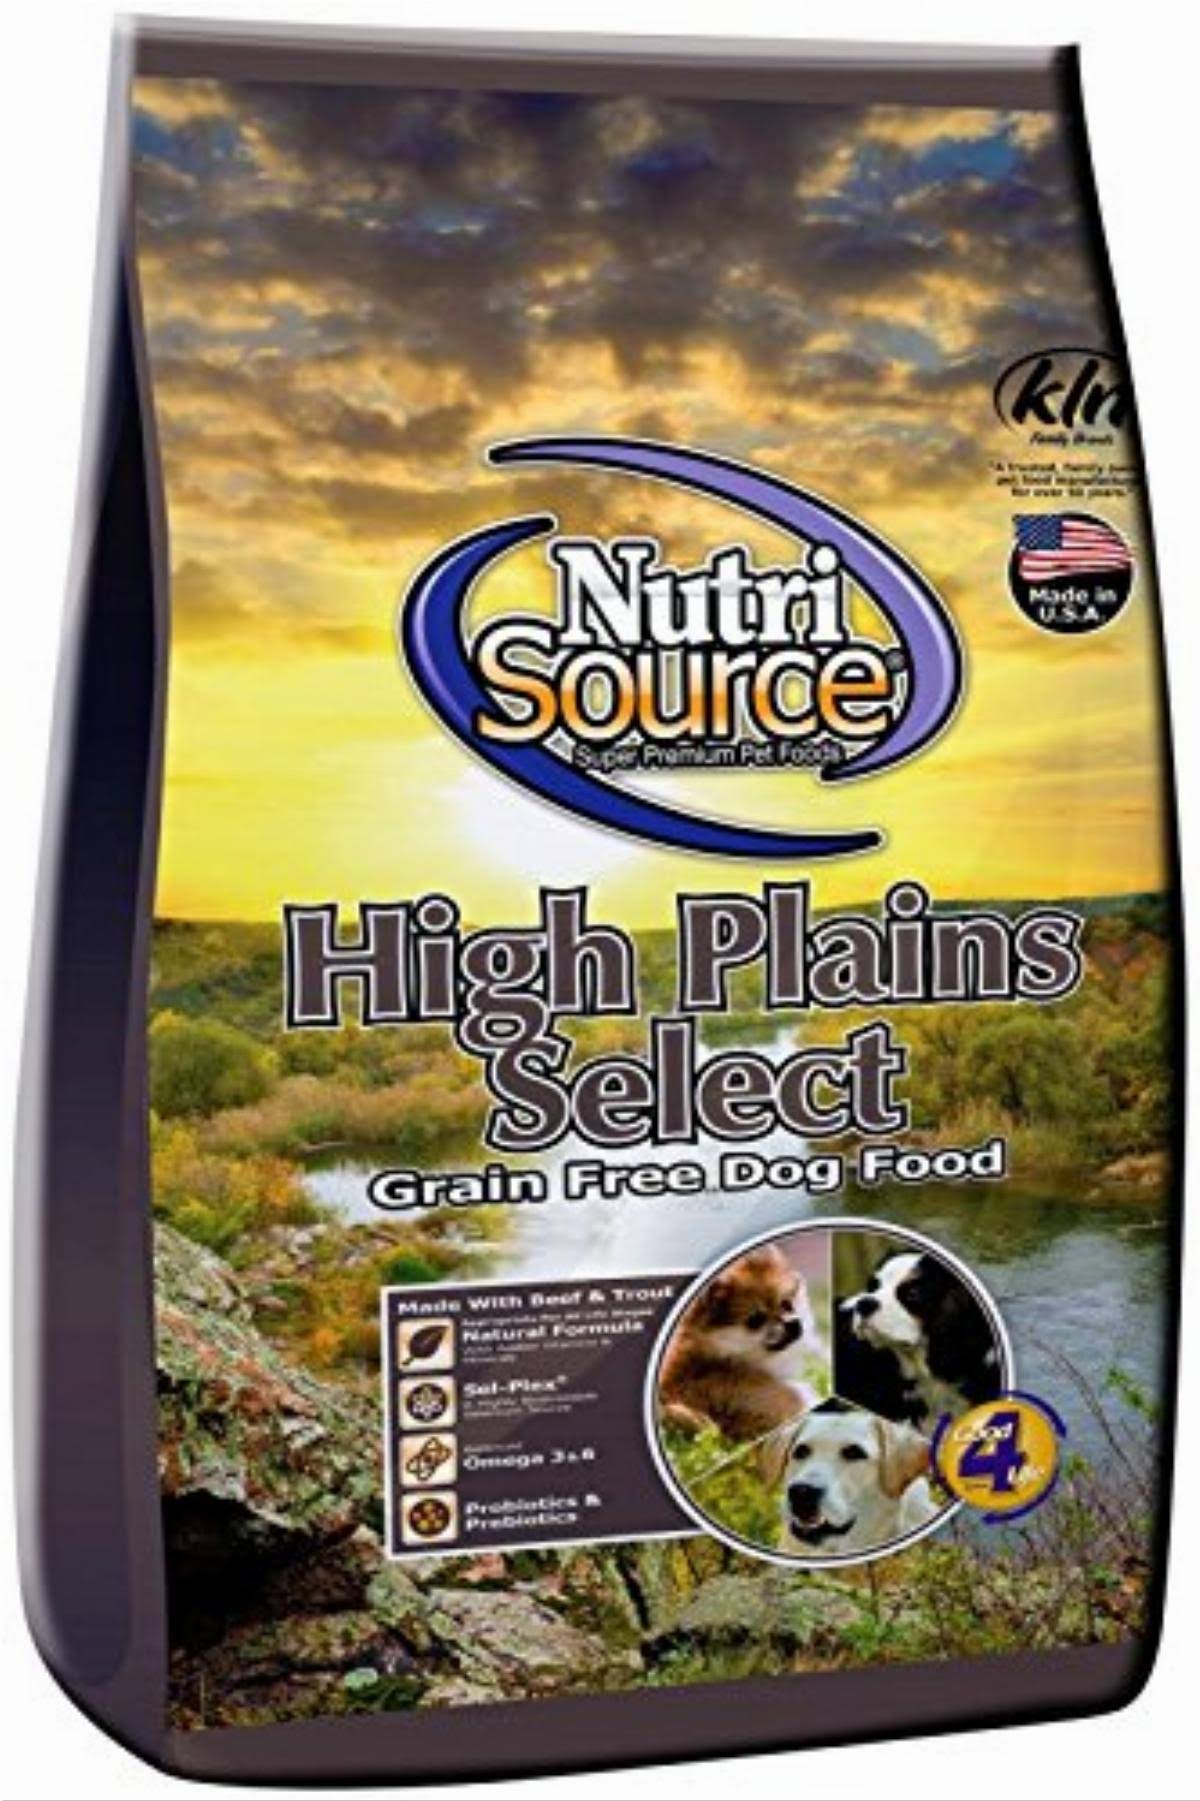 Nutri Source High Plains Select Dog Food